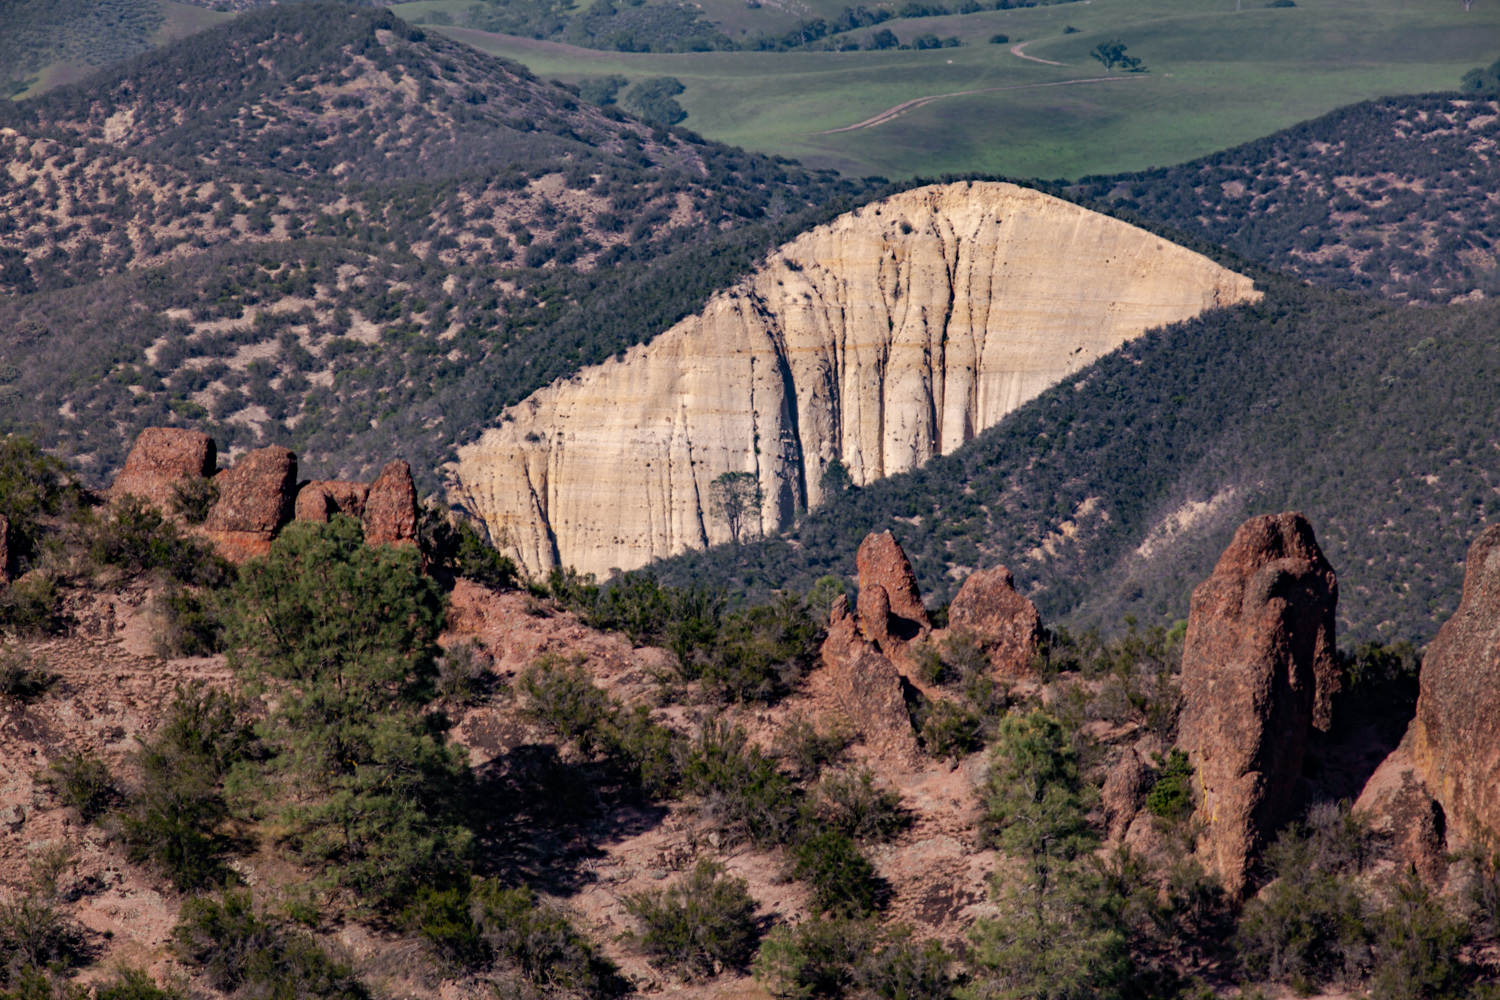 Distant rocks at Pinnacles National Park (April 2018)